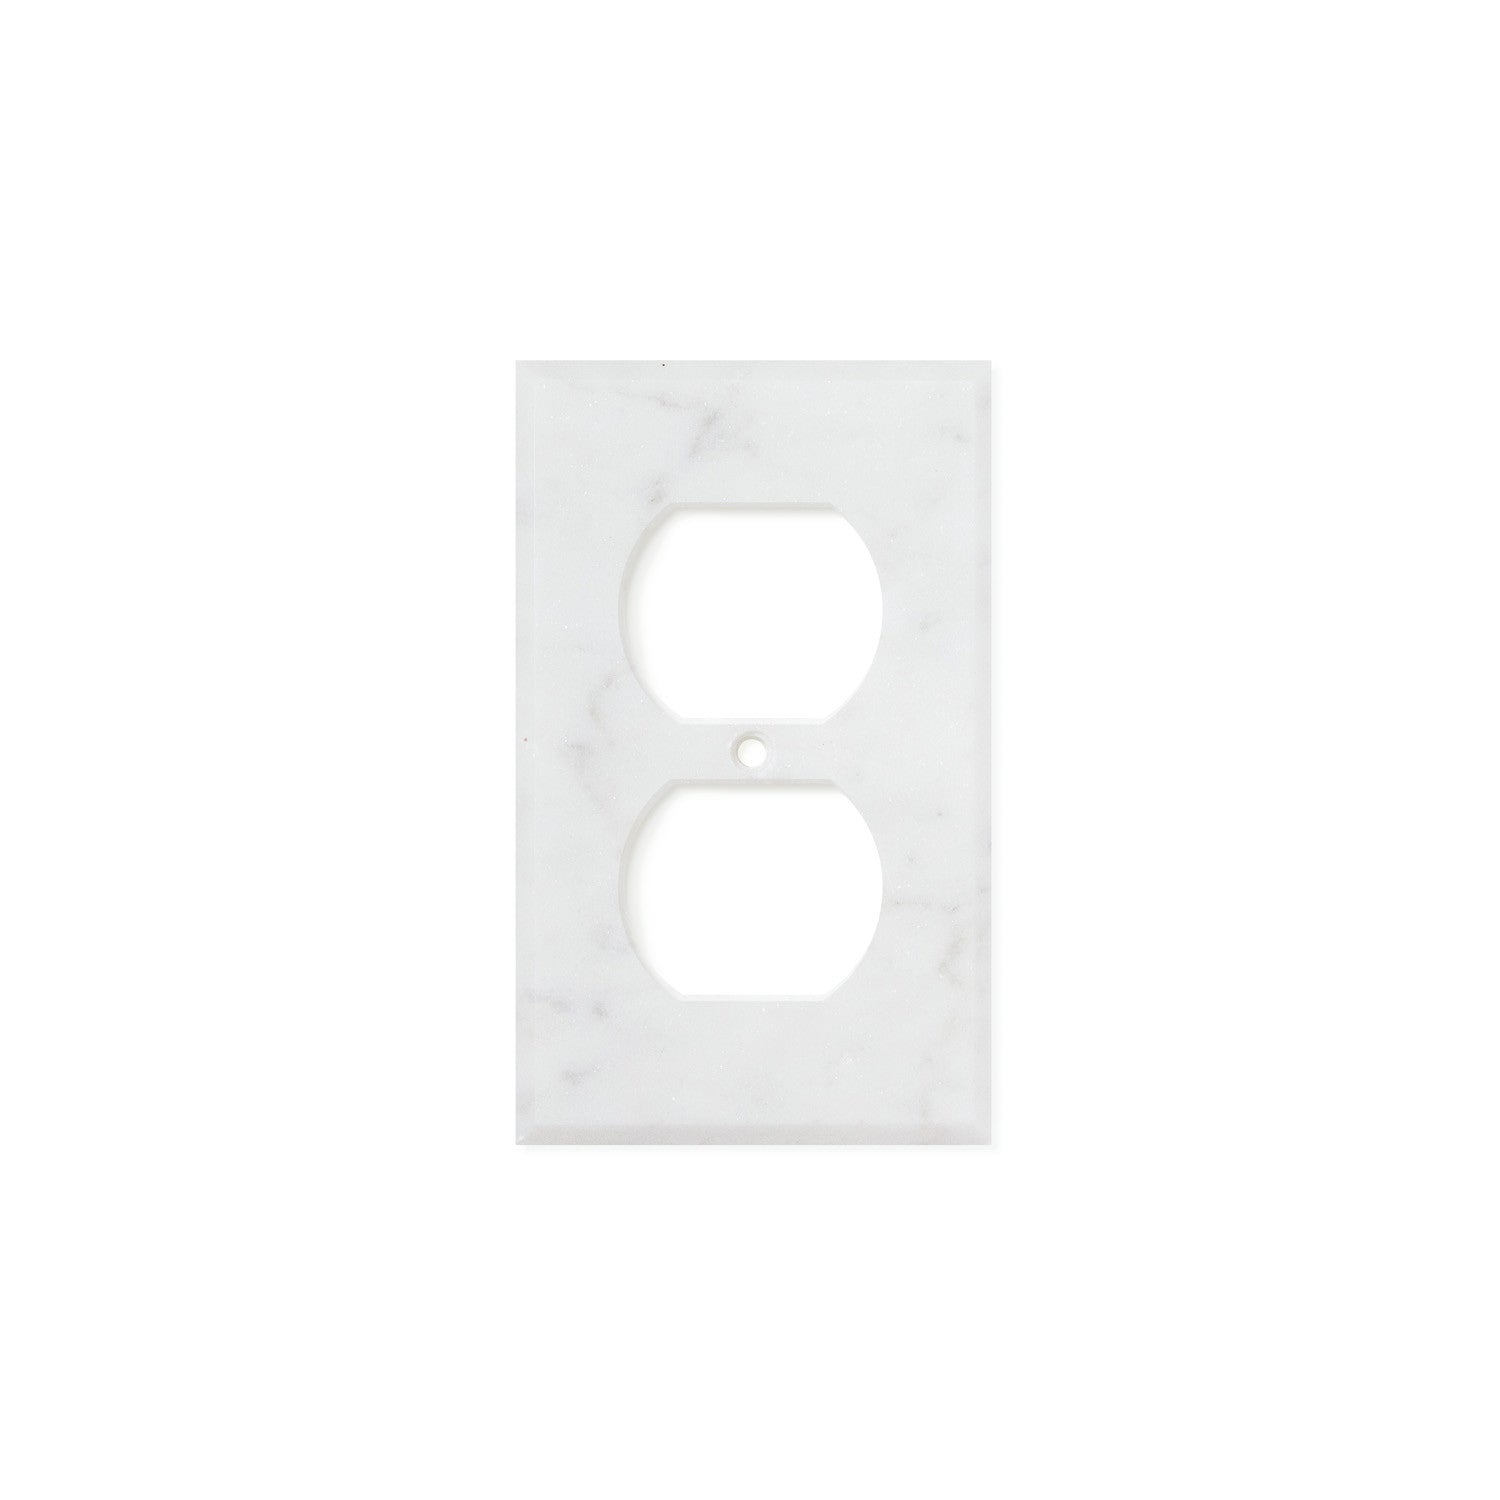 Bianco Carrara (Carrara White) Marble Switch Plate Cover, Polished (SINGLE DUPLEX) - Tilephile